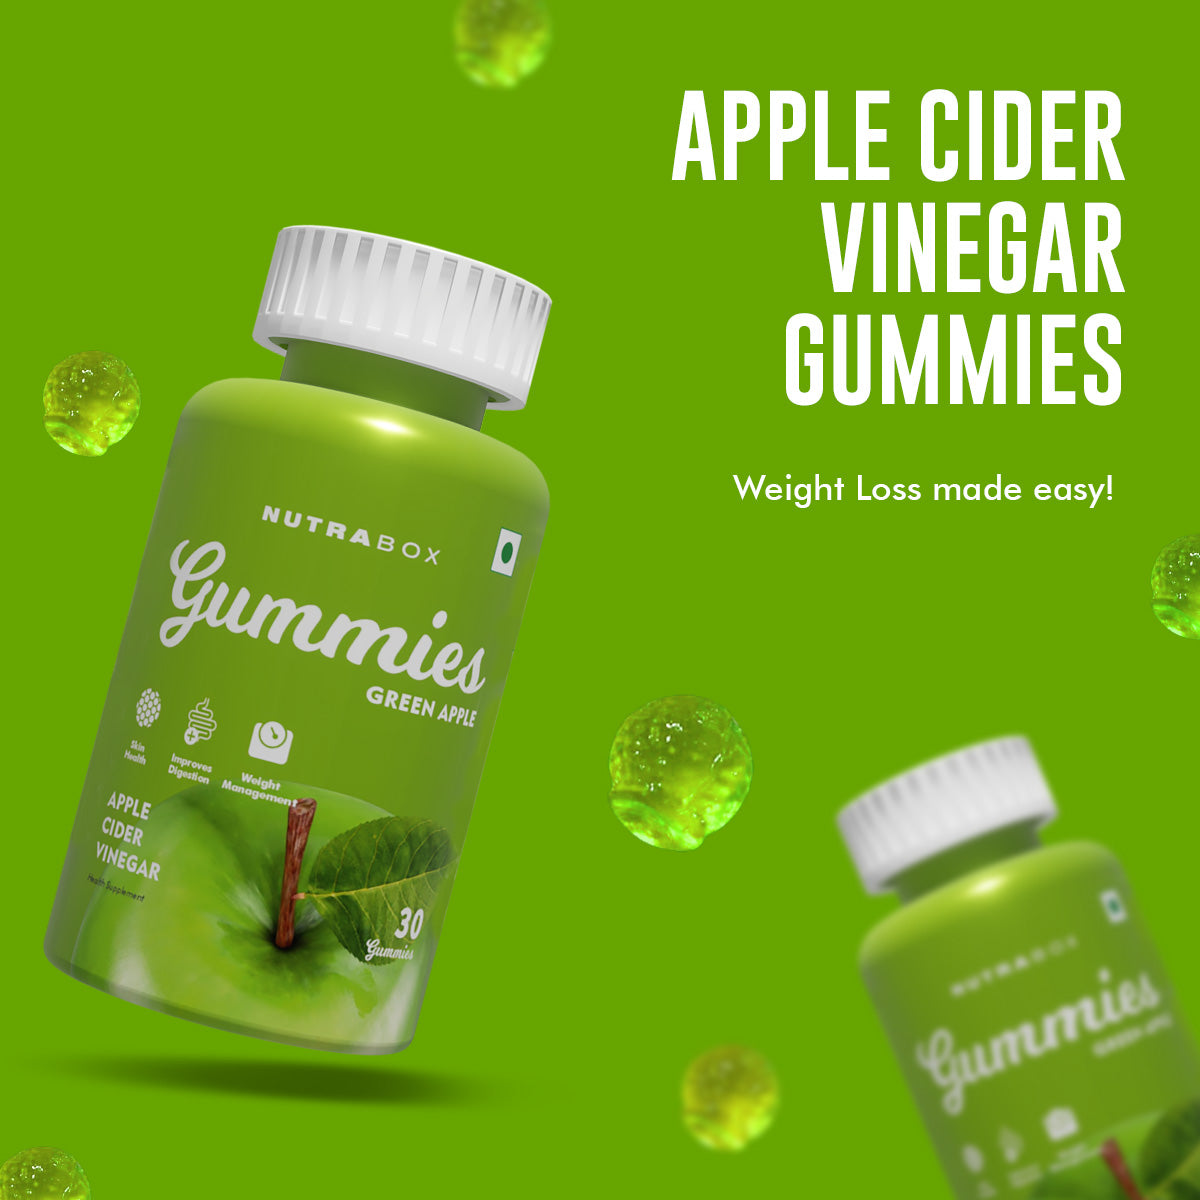 Nutrabox Apple Cider Vinegar Gummies